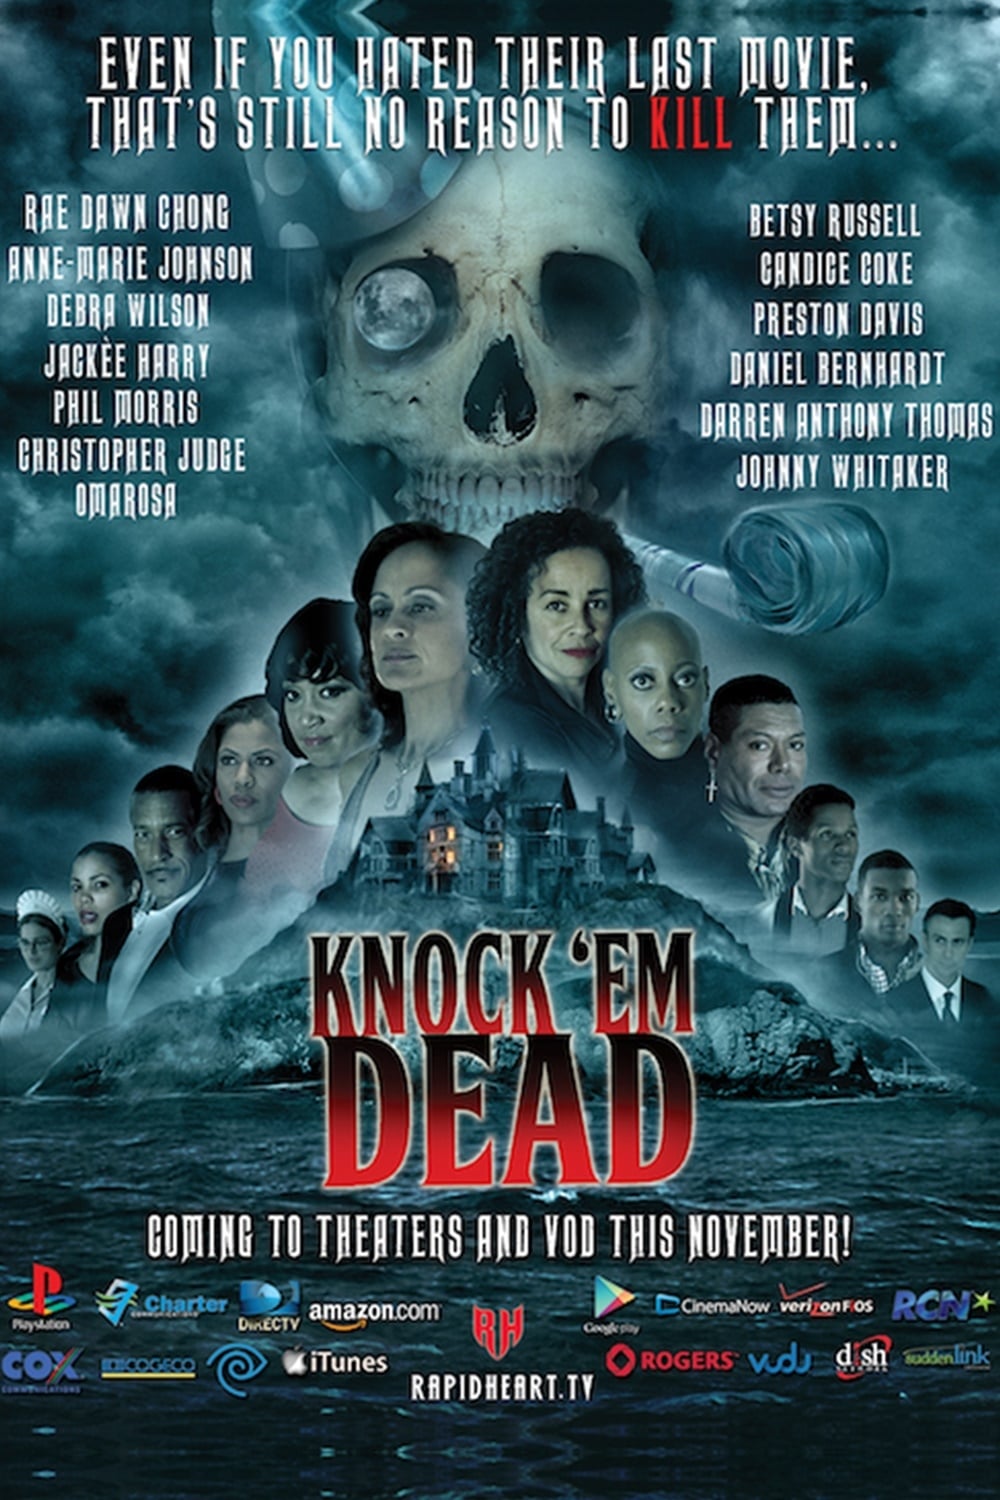 Knock 'em Dead (2014)